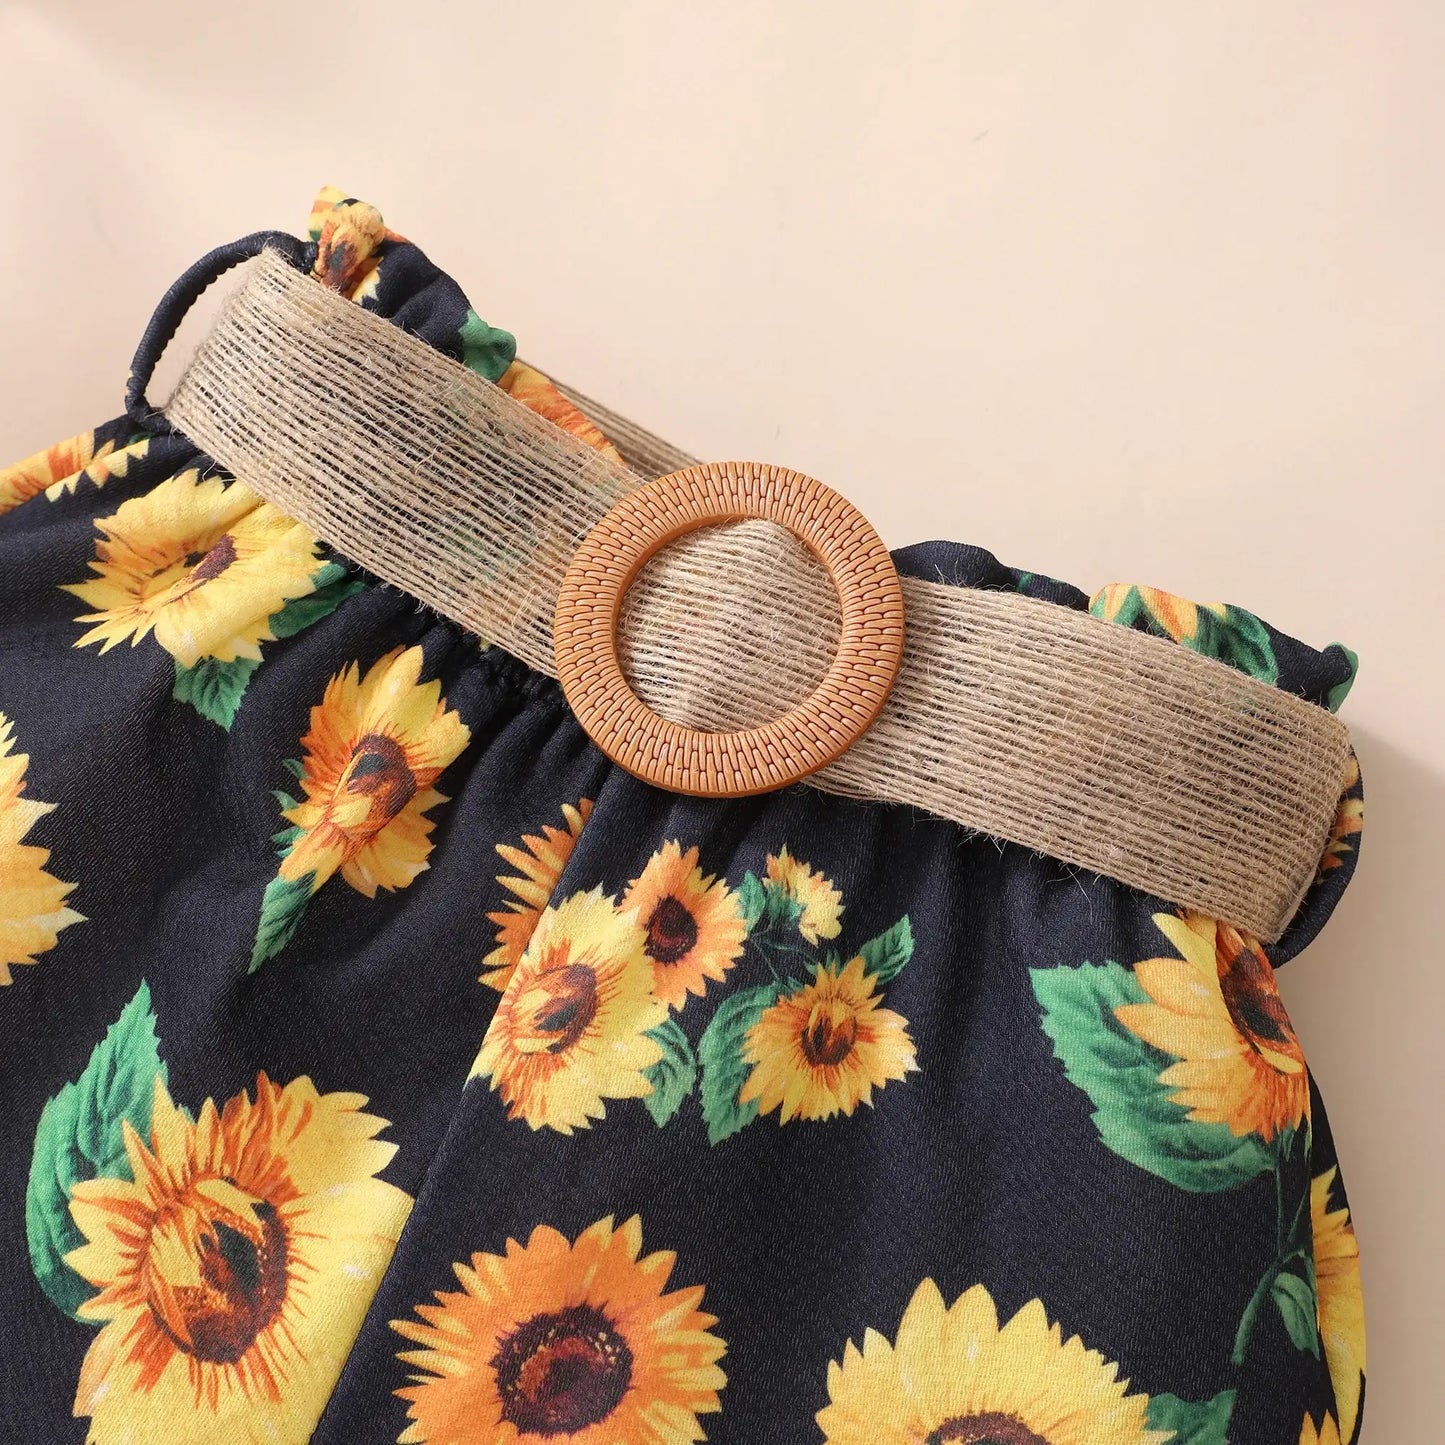 Summer Big Girls Sleeveless Tank Top with Eye-Catching Sunflower Printed Shorts